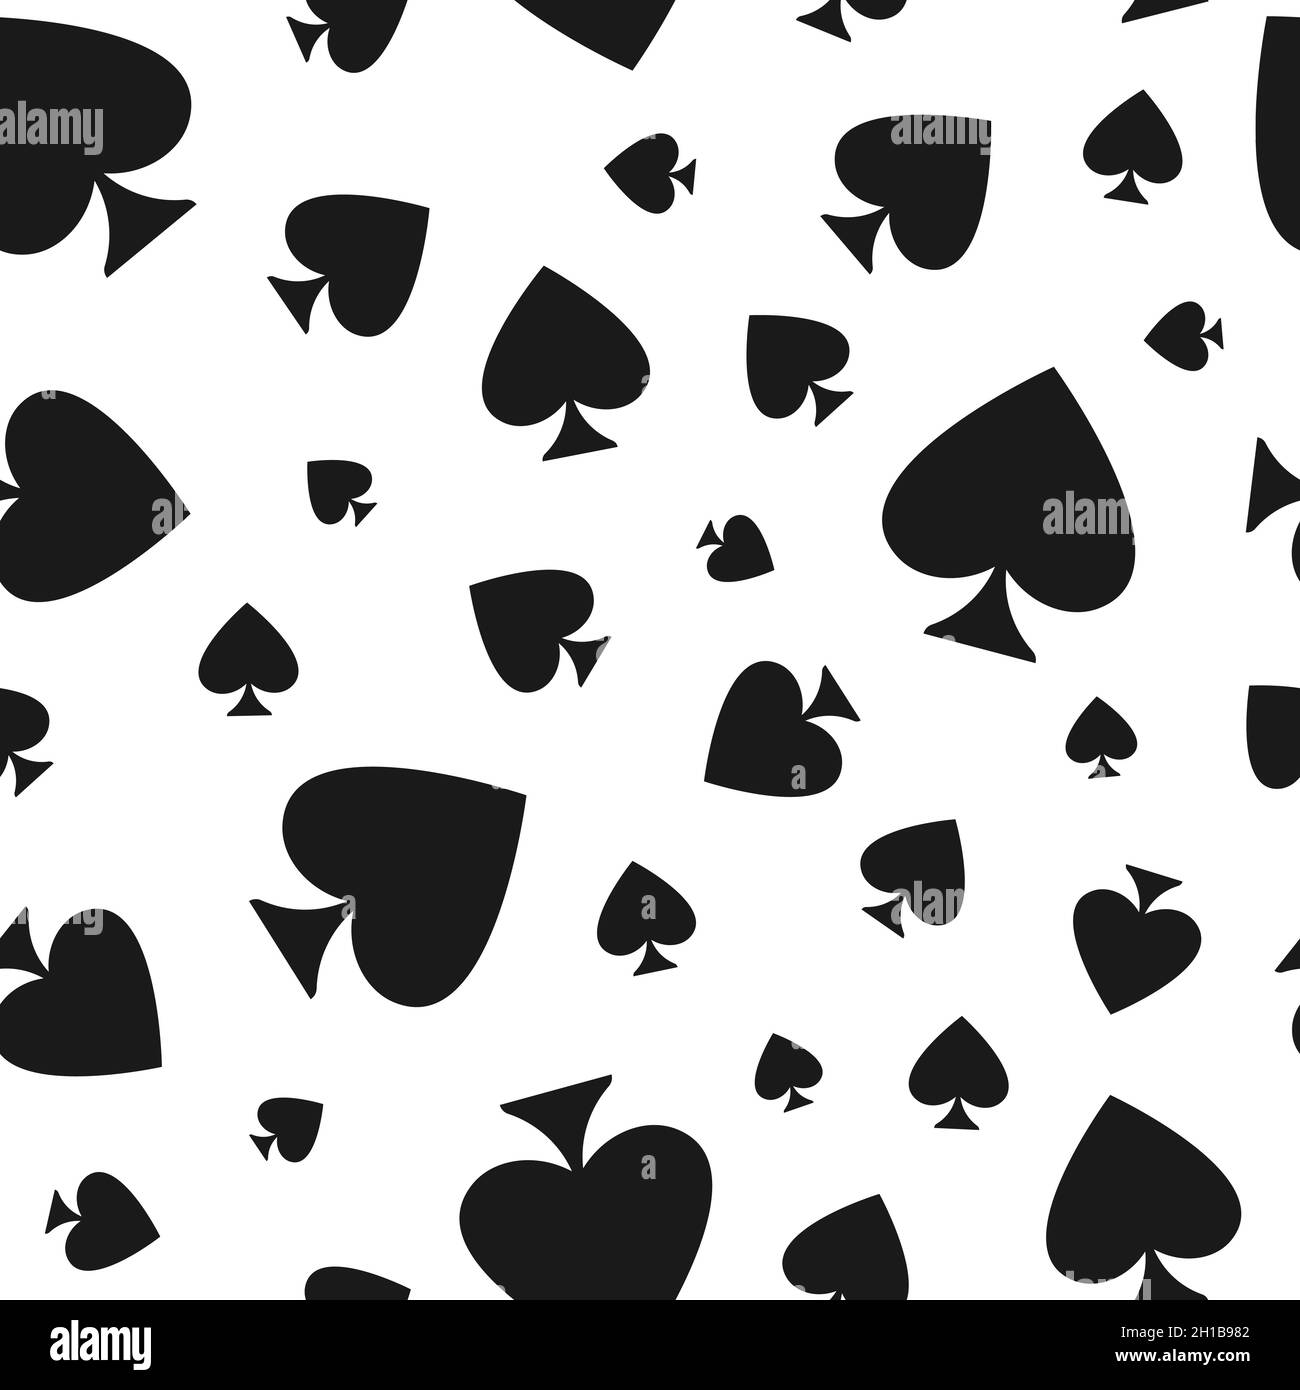 Seamless pattern with spades. Casino gambling, poker background. Alice in wonderland ornament. Fantasy wallpaper. Stock Vector